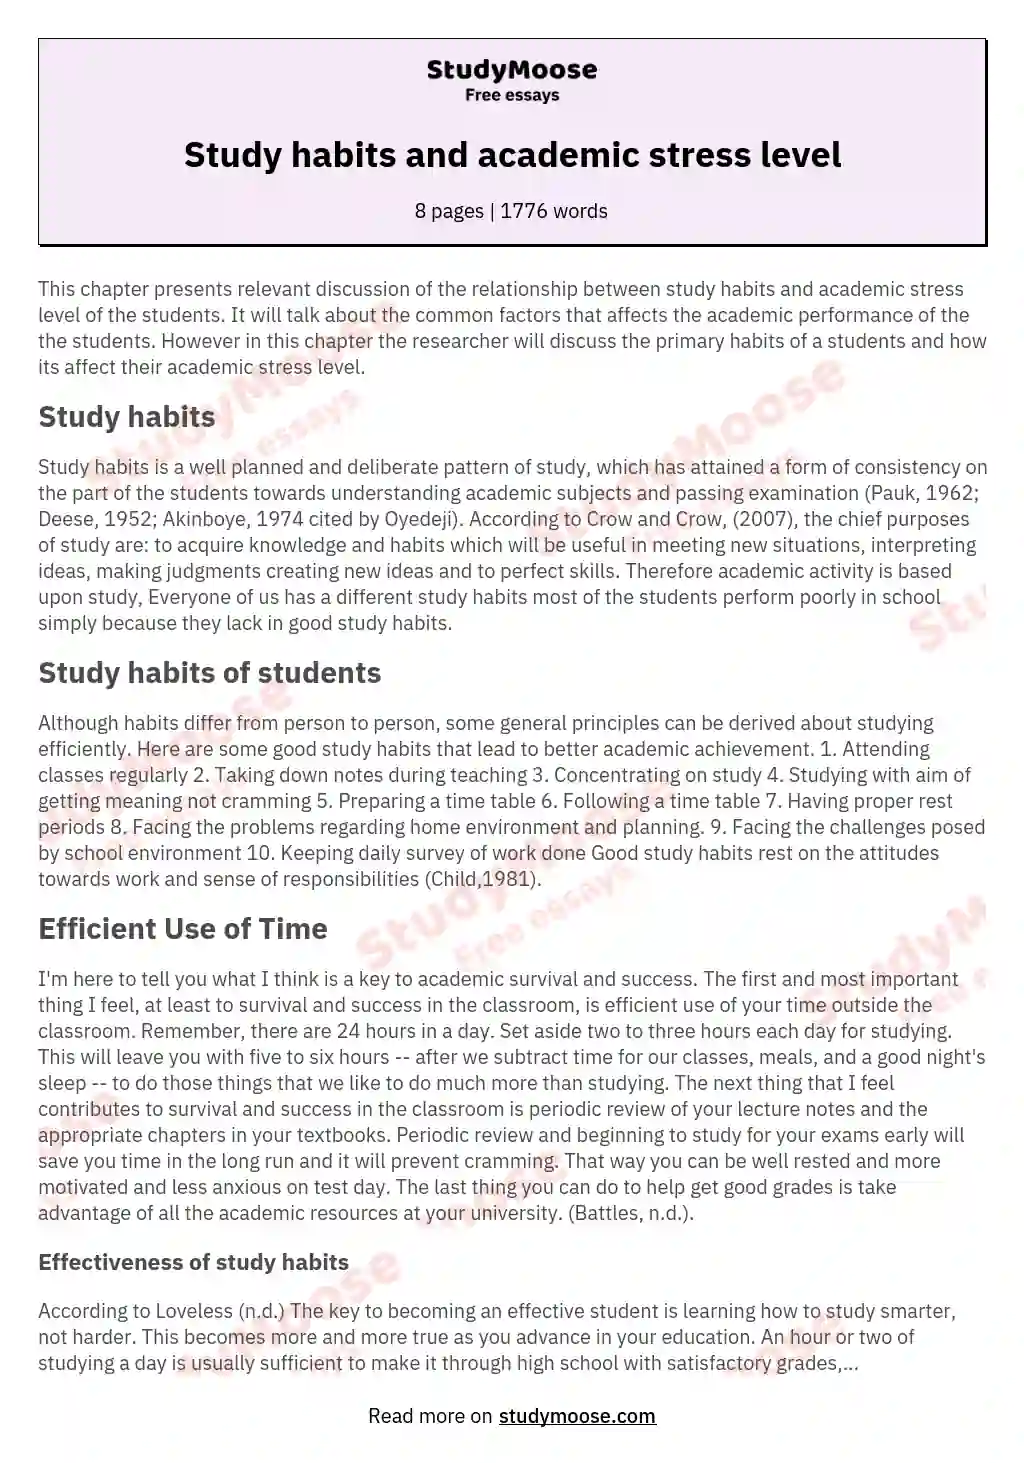 Study habits and academic stress level essay